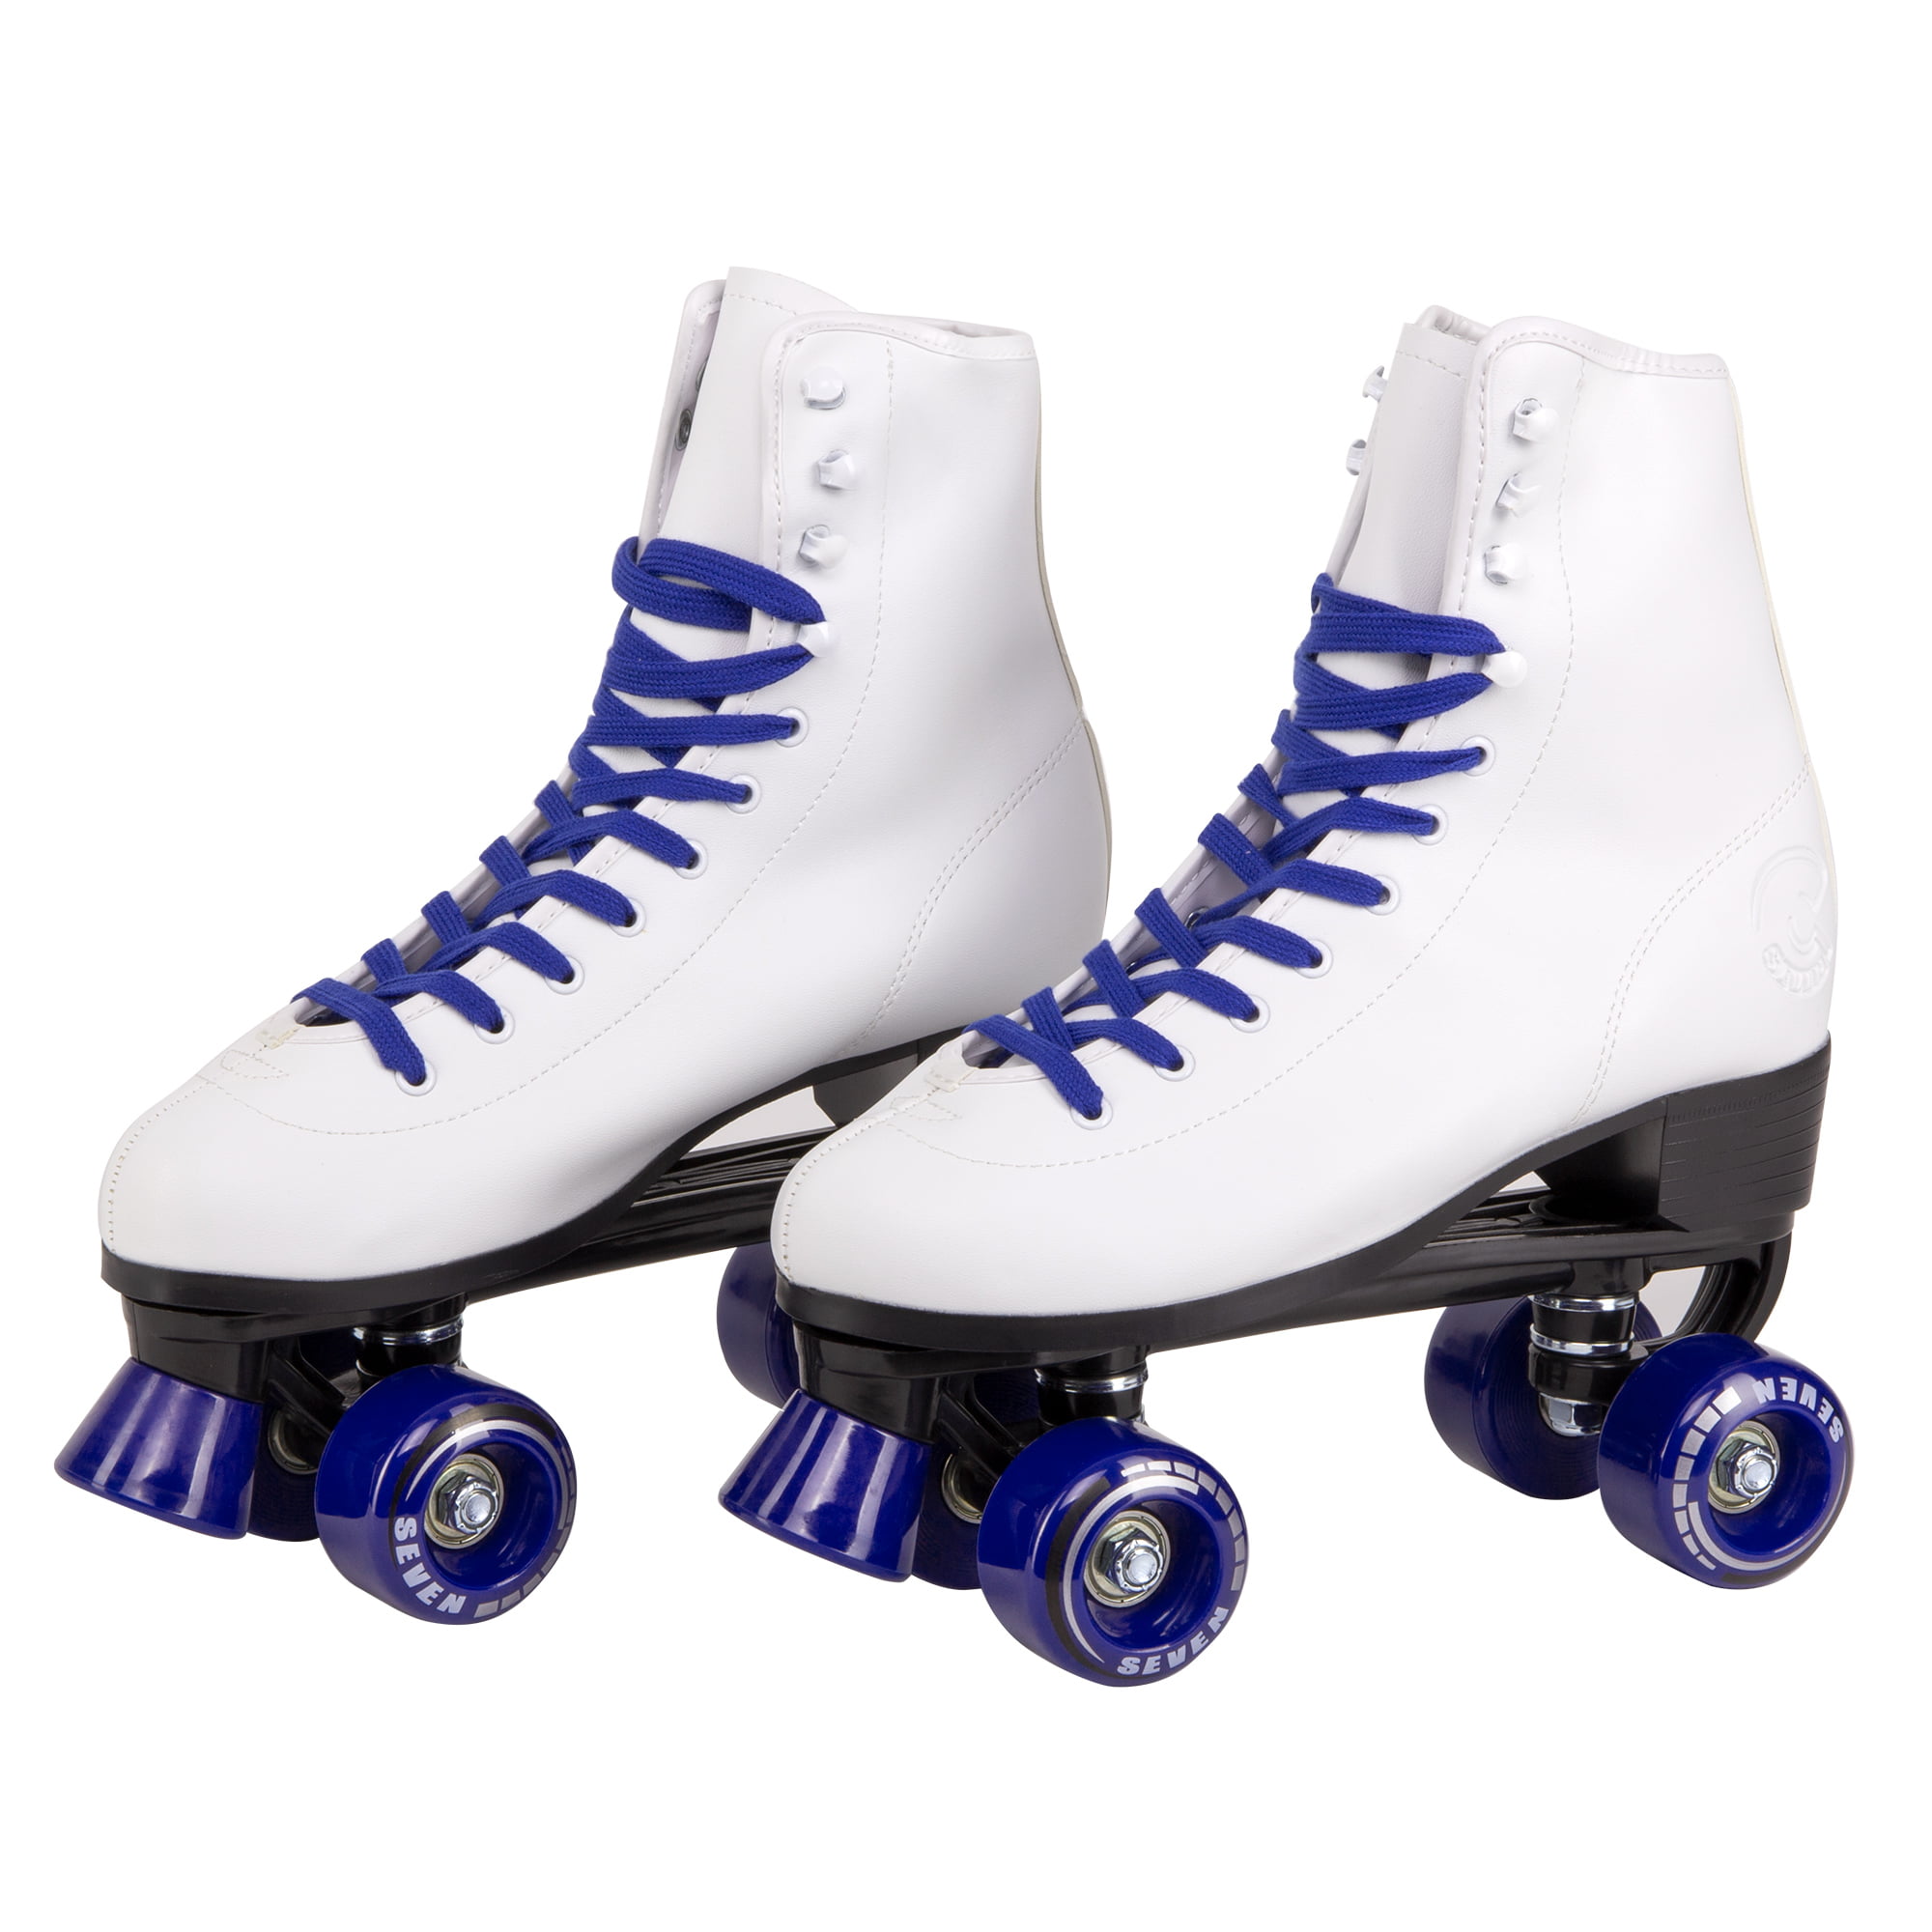 C7skates Teal Blue Soft Faux Leather Roller Skates Girls Christmas Gifts 